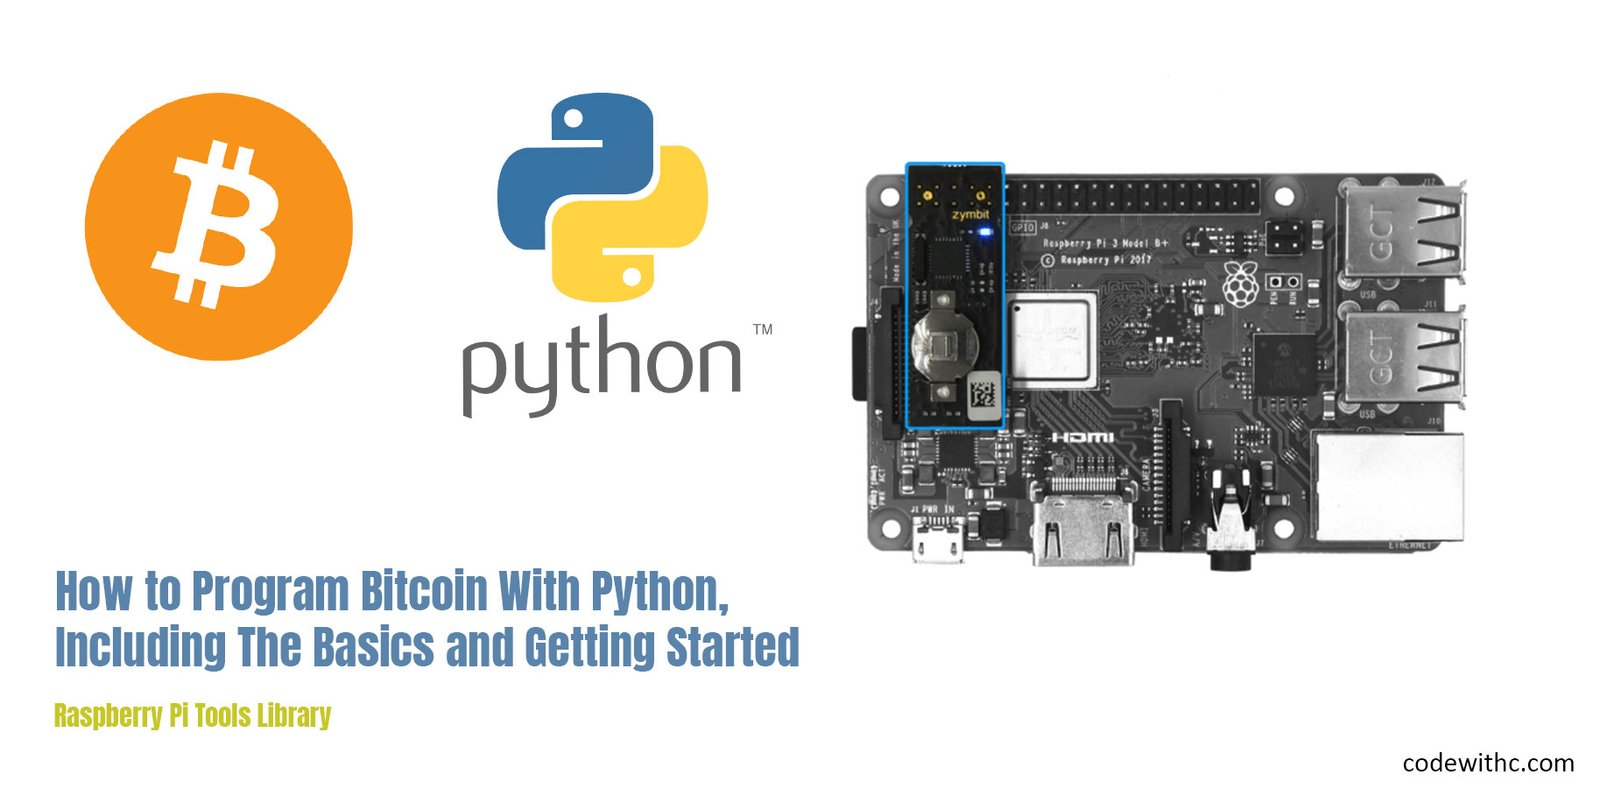 Bitcoin Transaction: Python parsing library